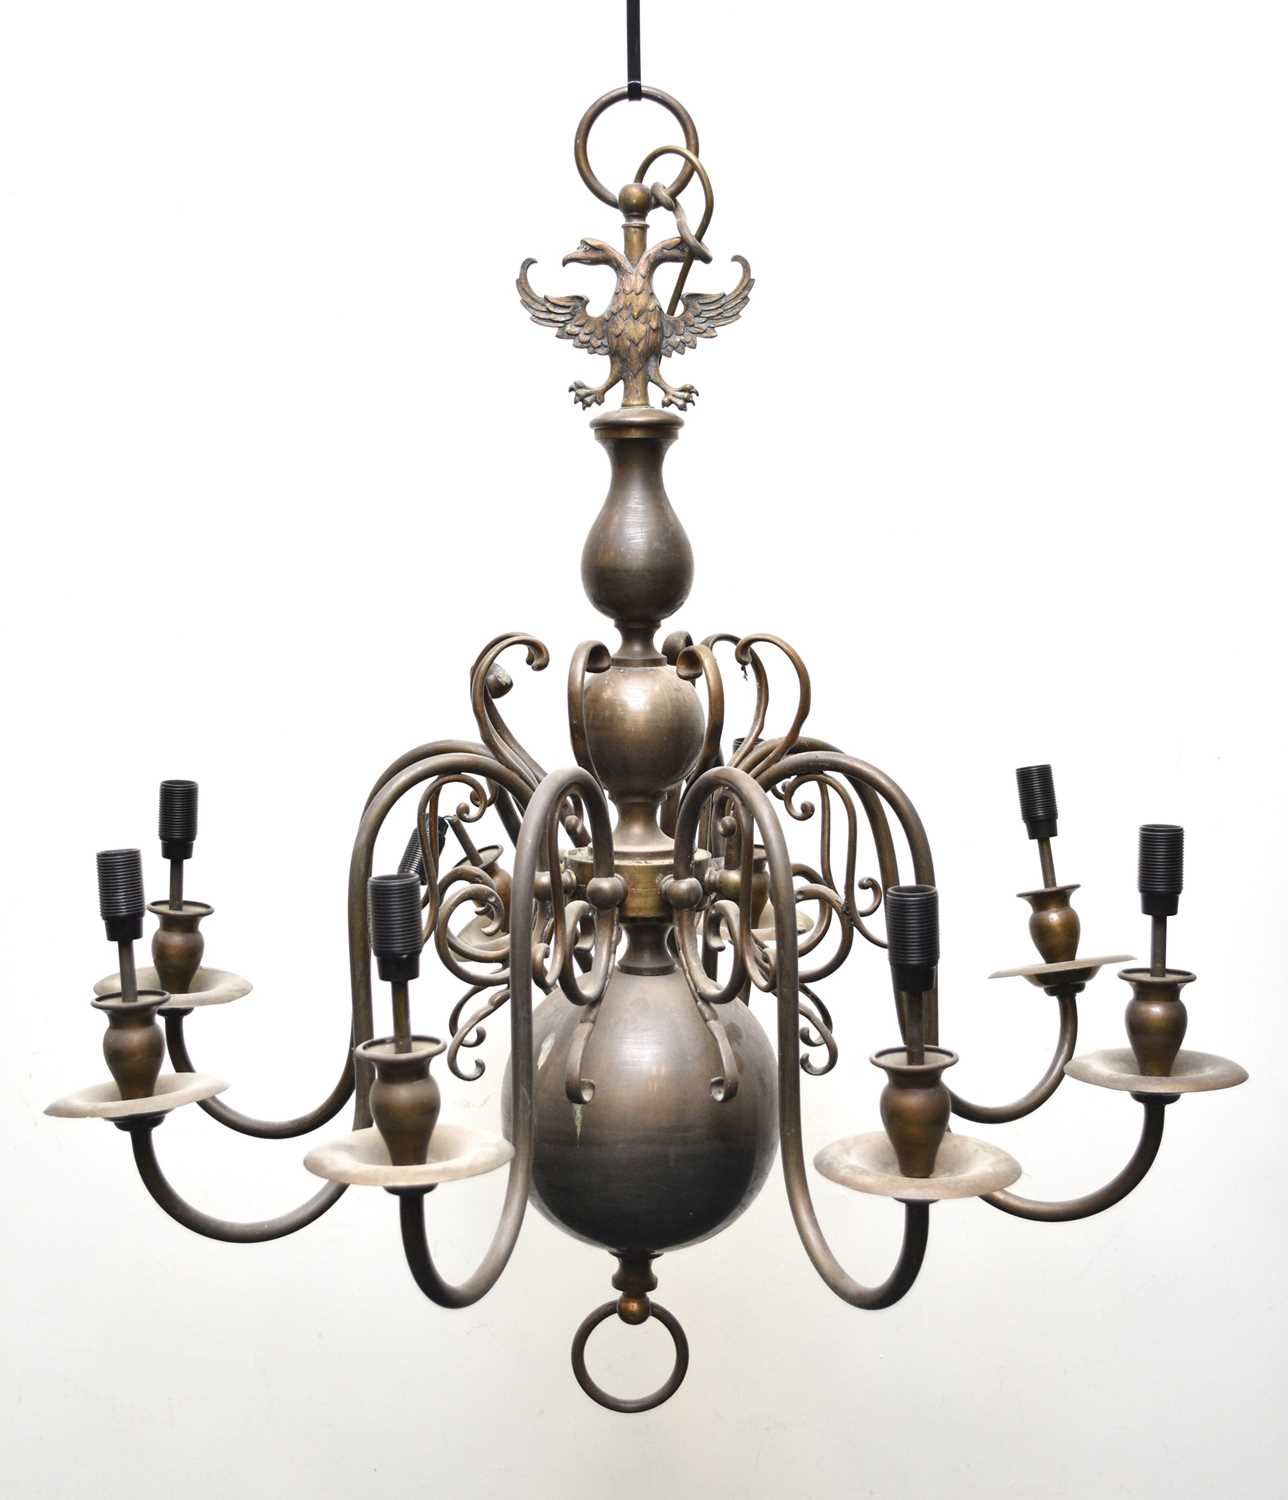 Two Dutch style brass chandeliers